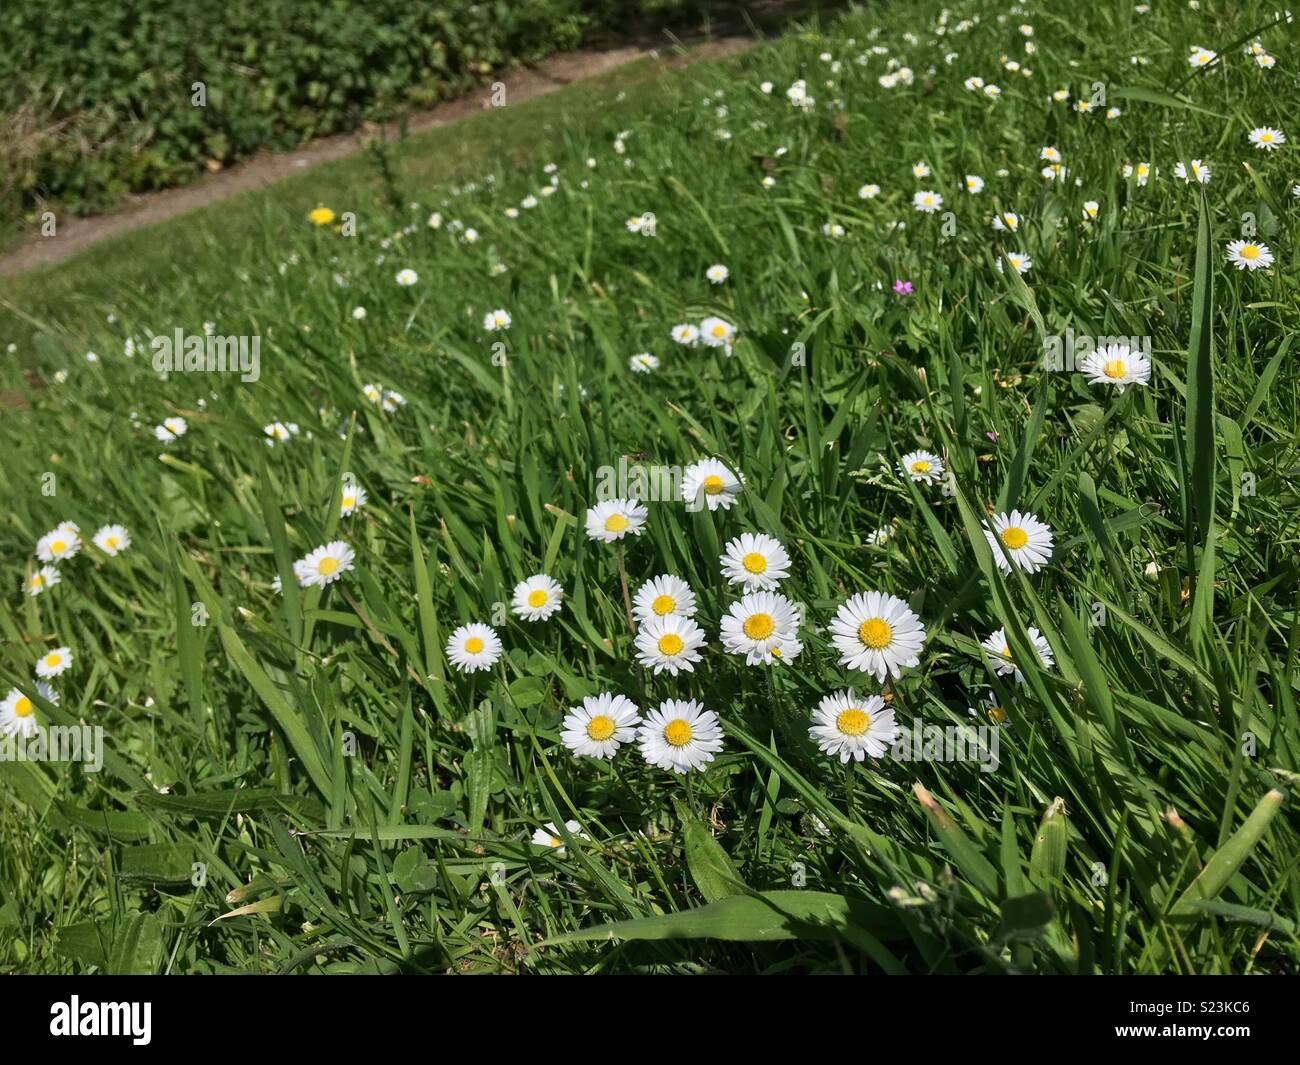 Daisy’s catching some sunshine Stock Photo